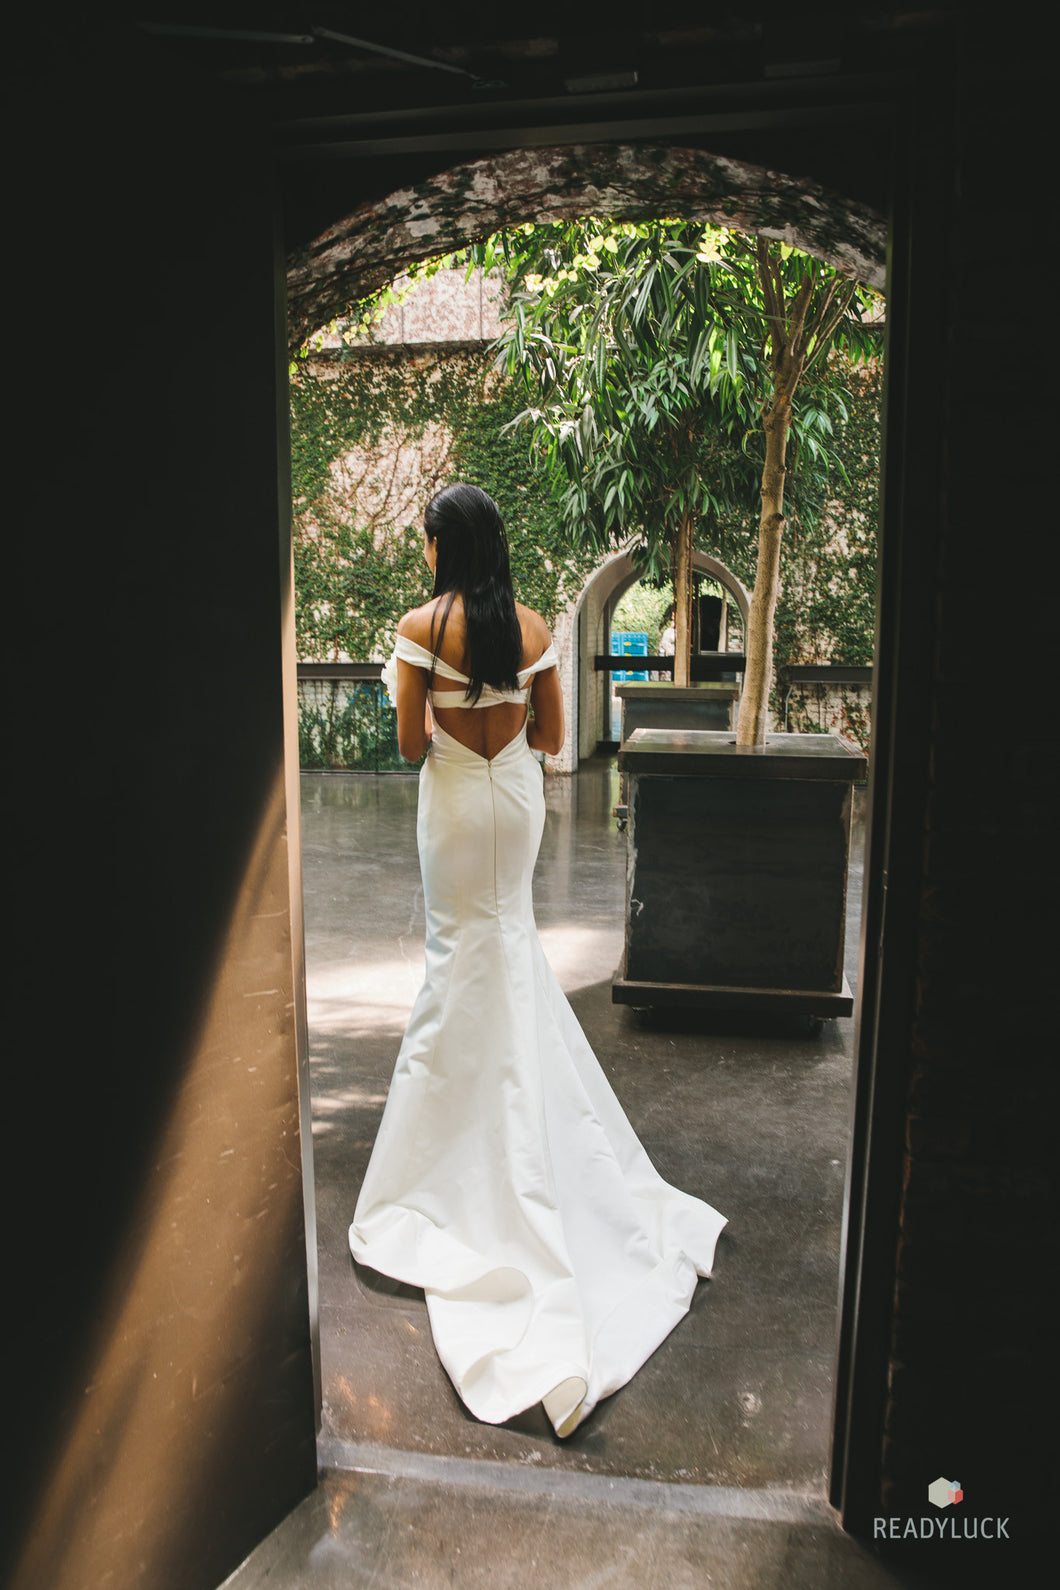 Austin Scarlett 'Eden' size 4 used wedding dress back view on bride